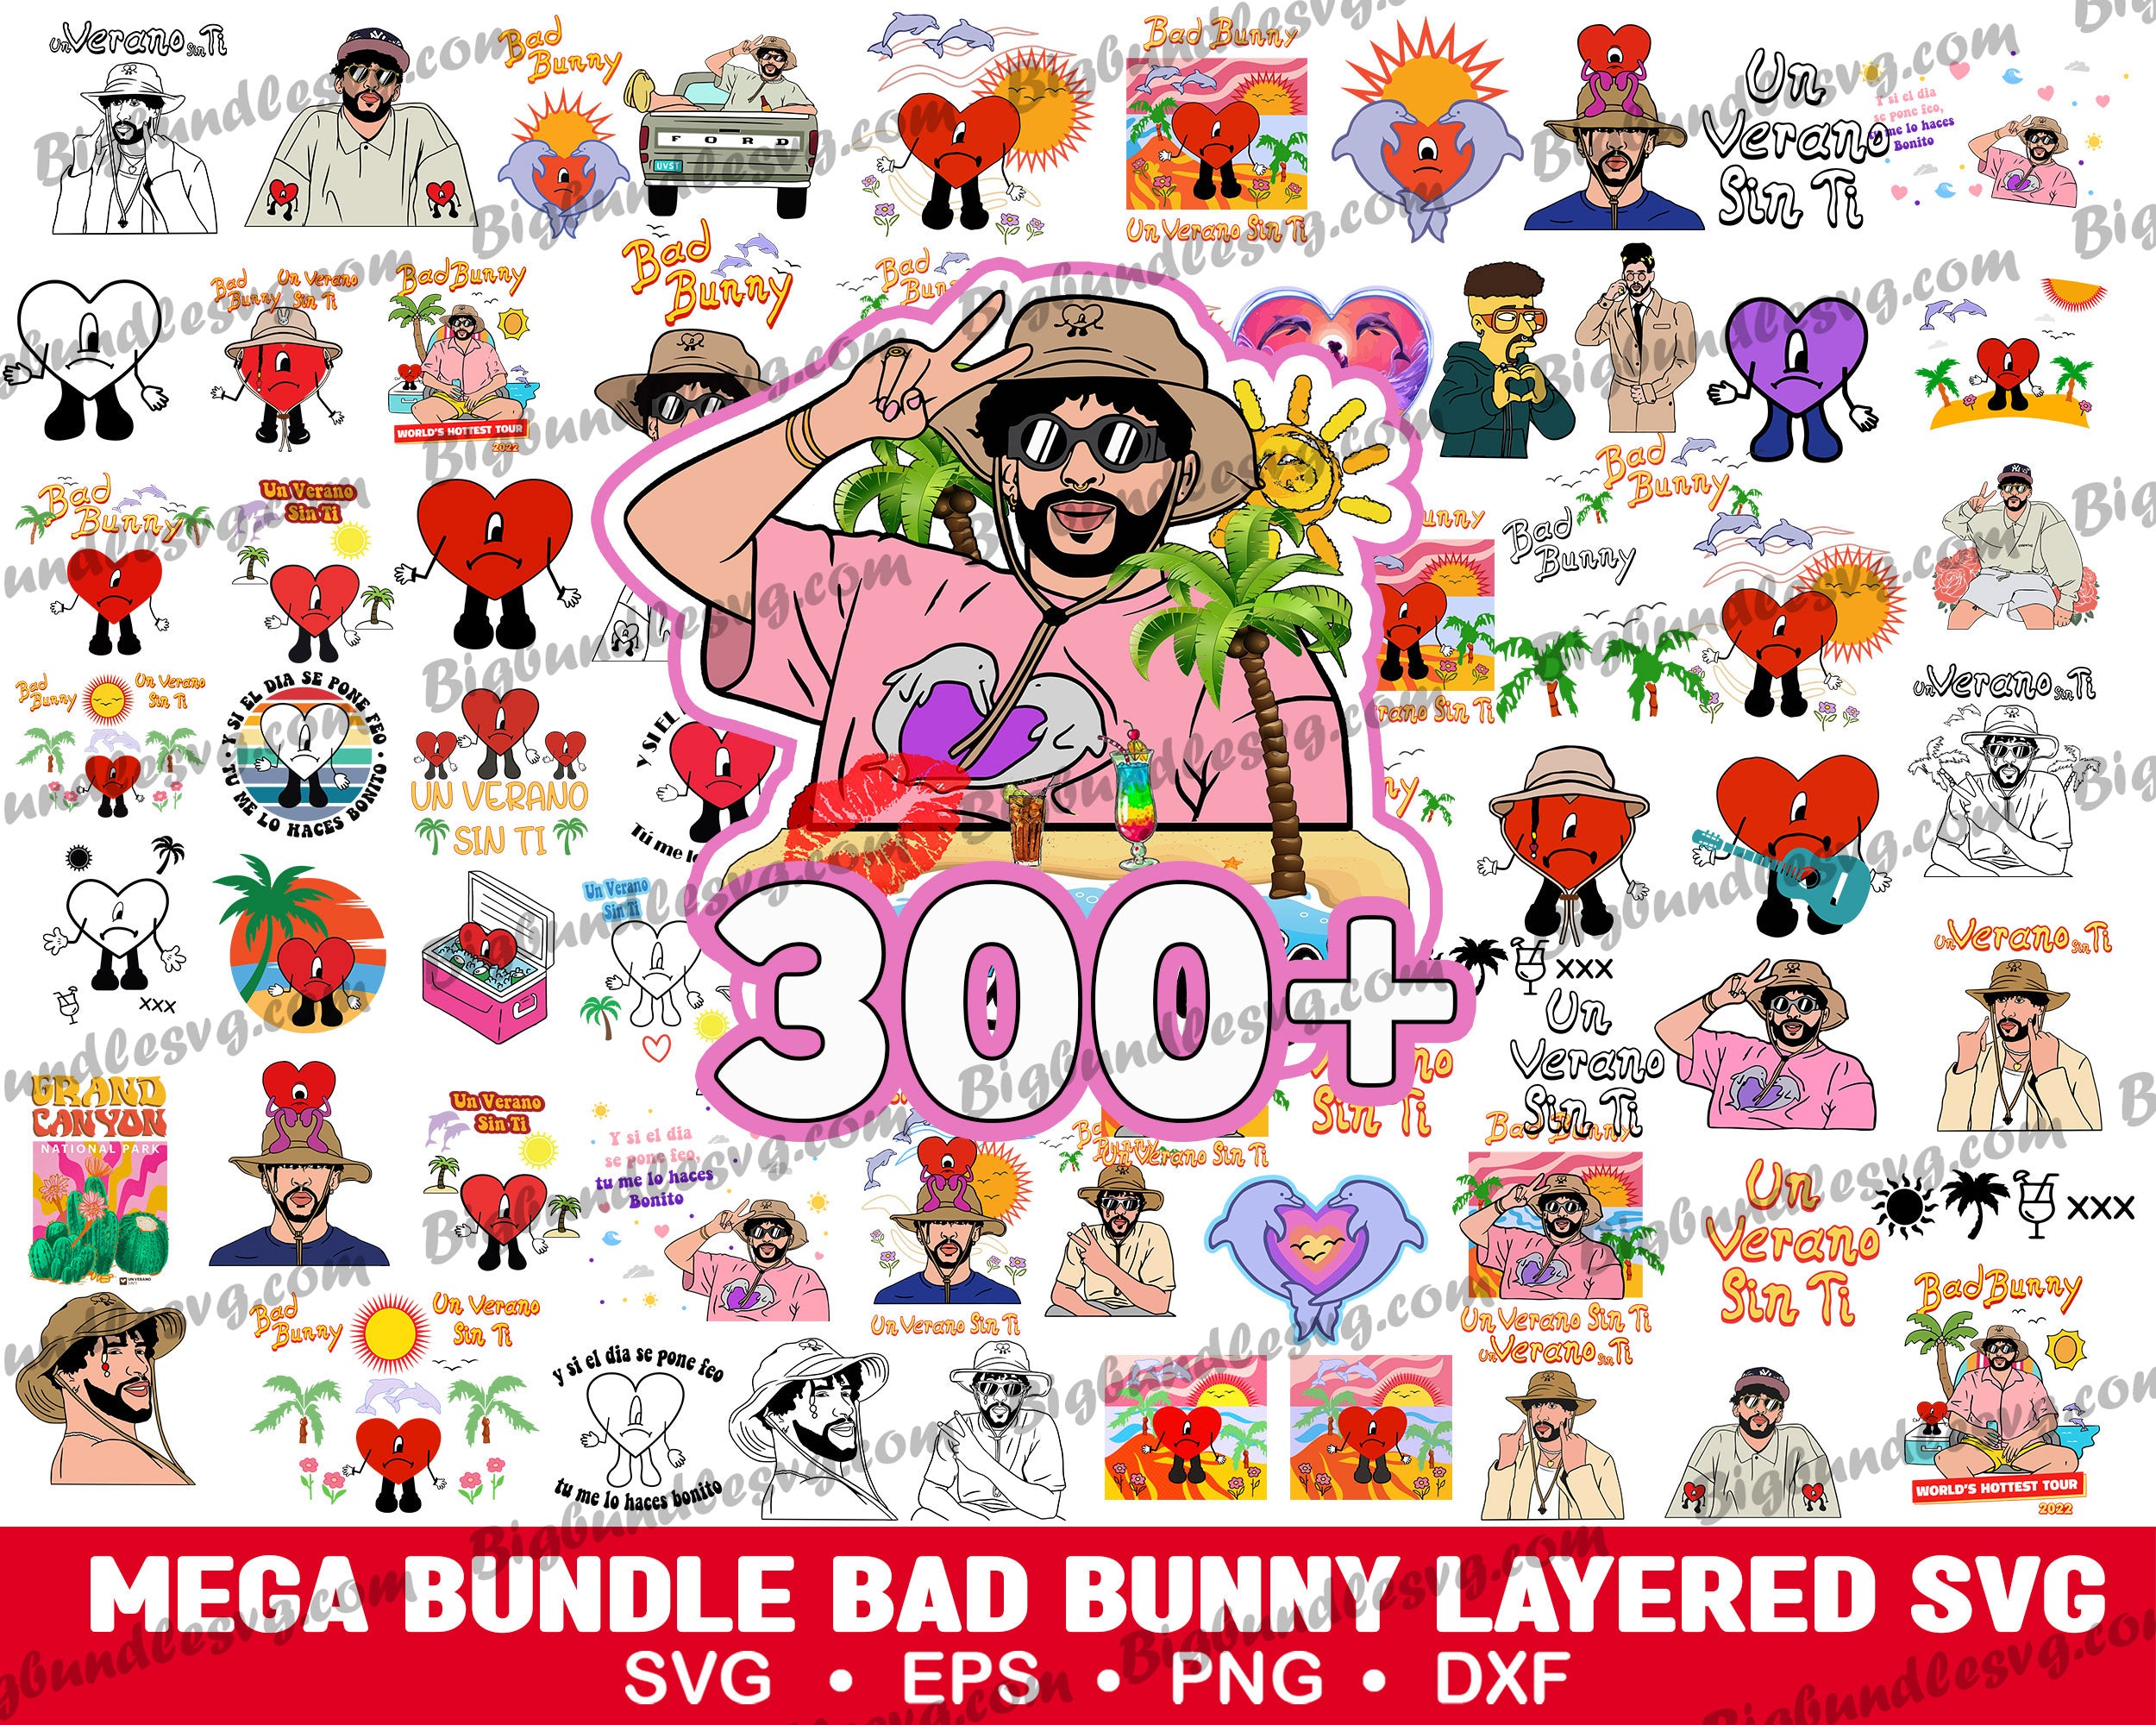 300+ Bad Bunny SVG, Bundle bad bunny layered svg